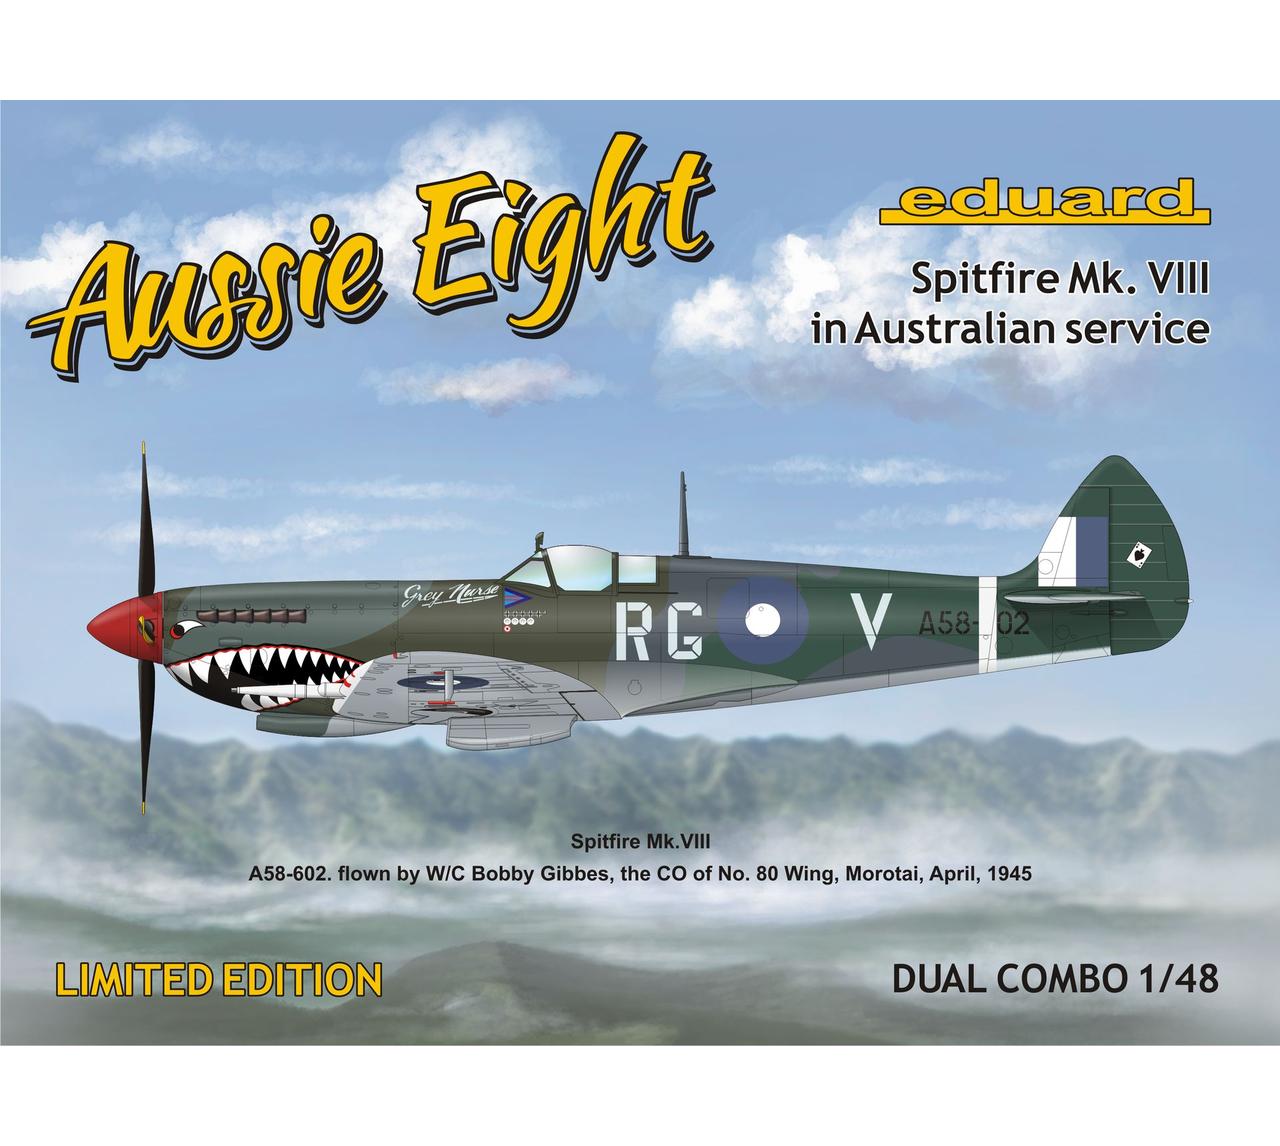 Eduard Spitfire-kavalkad, Aussie Eight #1 klar, Aussie Eight #2 NY!, Bonus: Airfix Spitfire XII - Sida 12 21